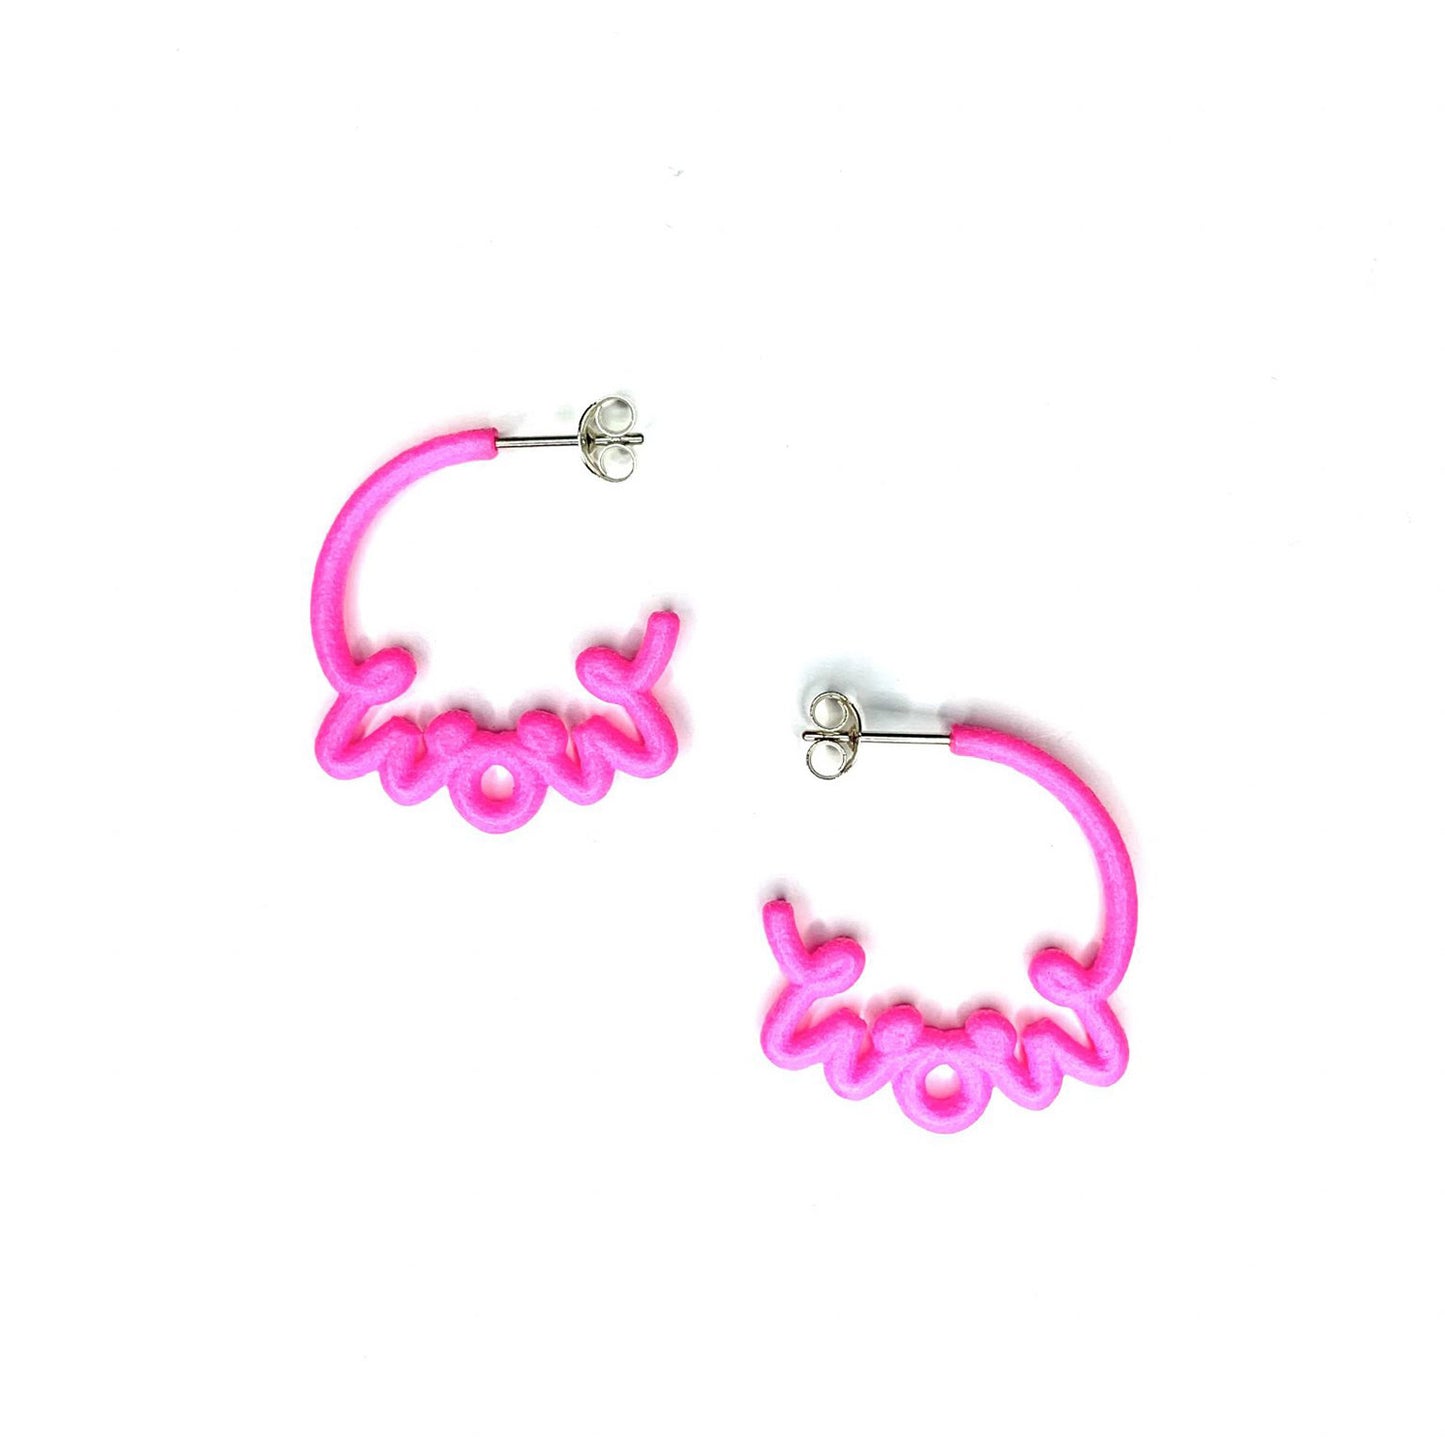 This is ‘WOW’ hoop earrings small neon pink